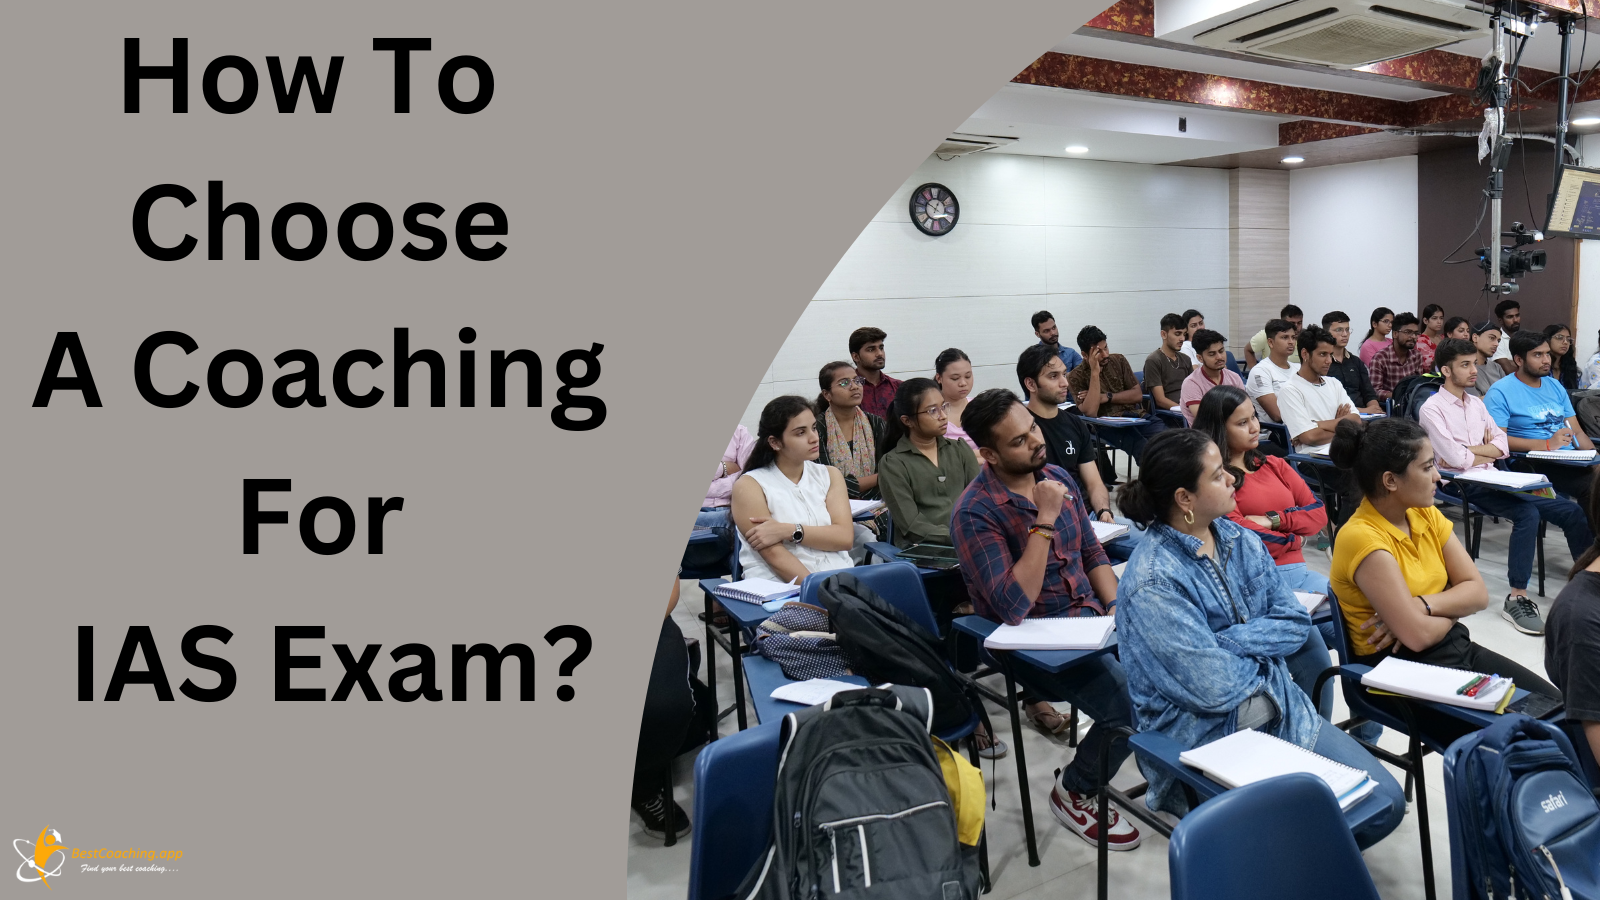 How to choose a coaching for IAS exam?